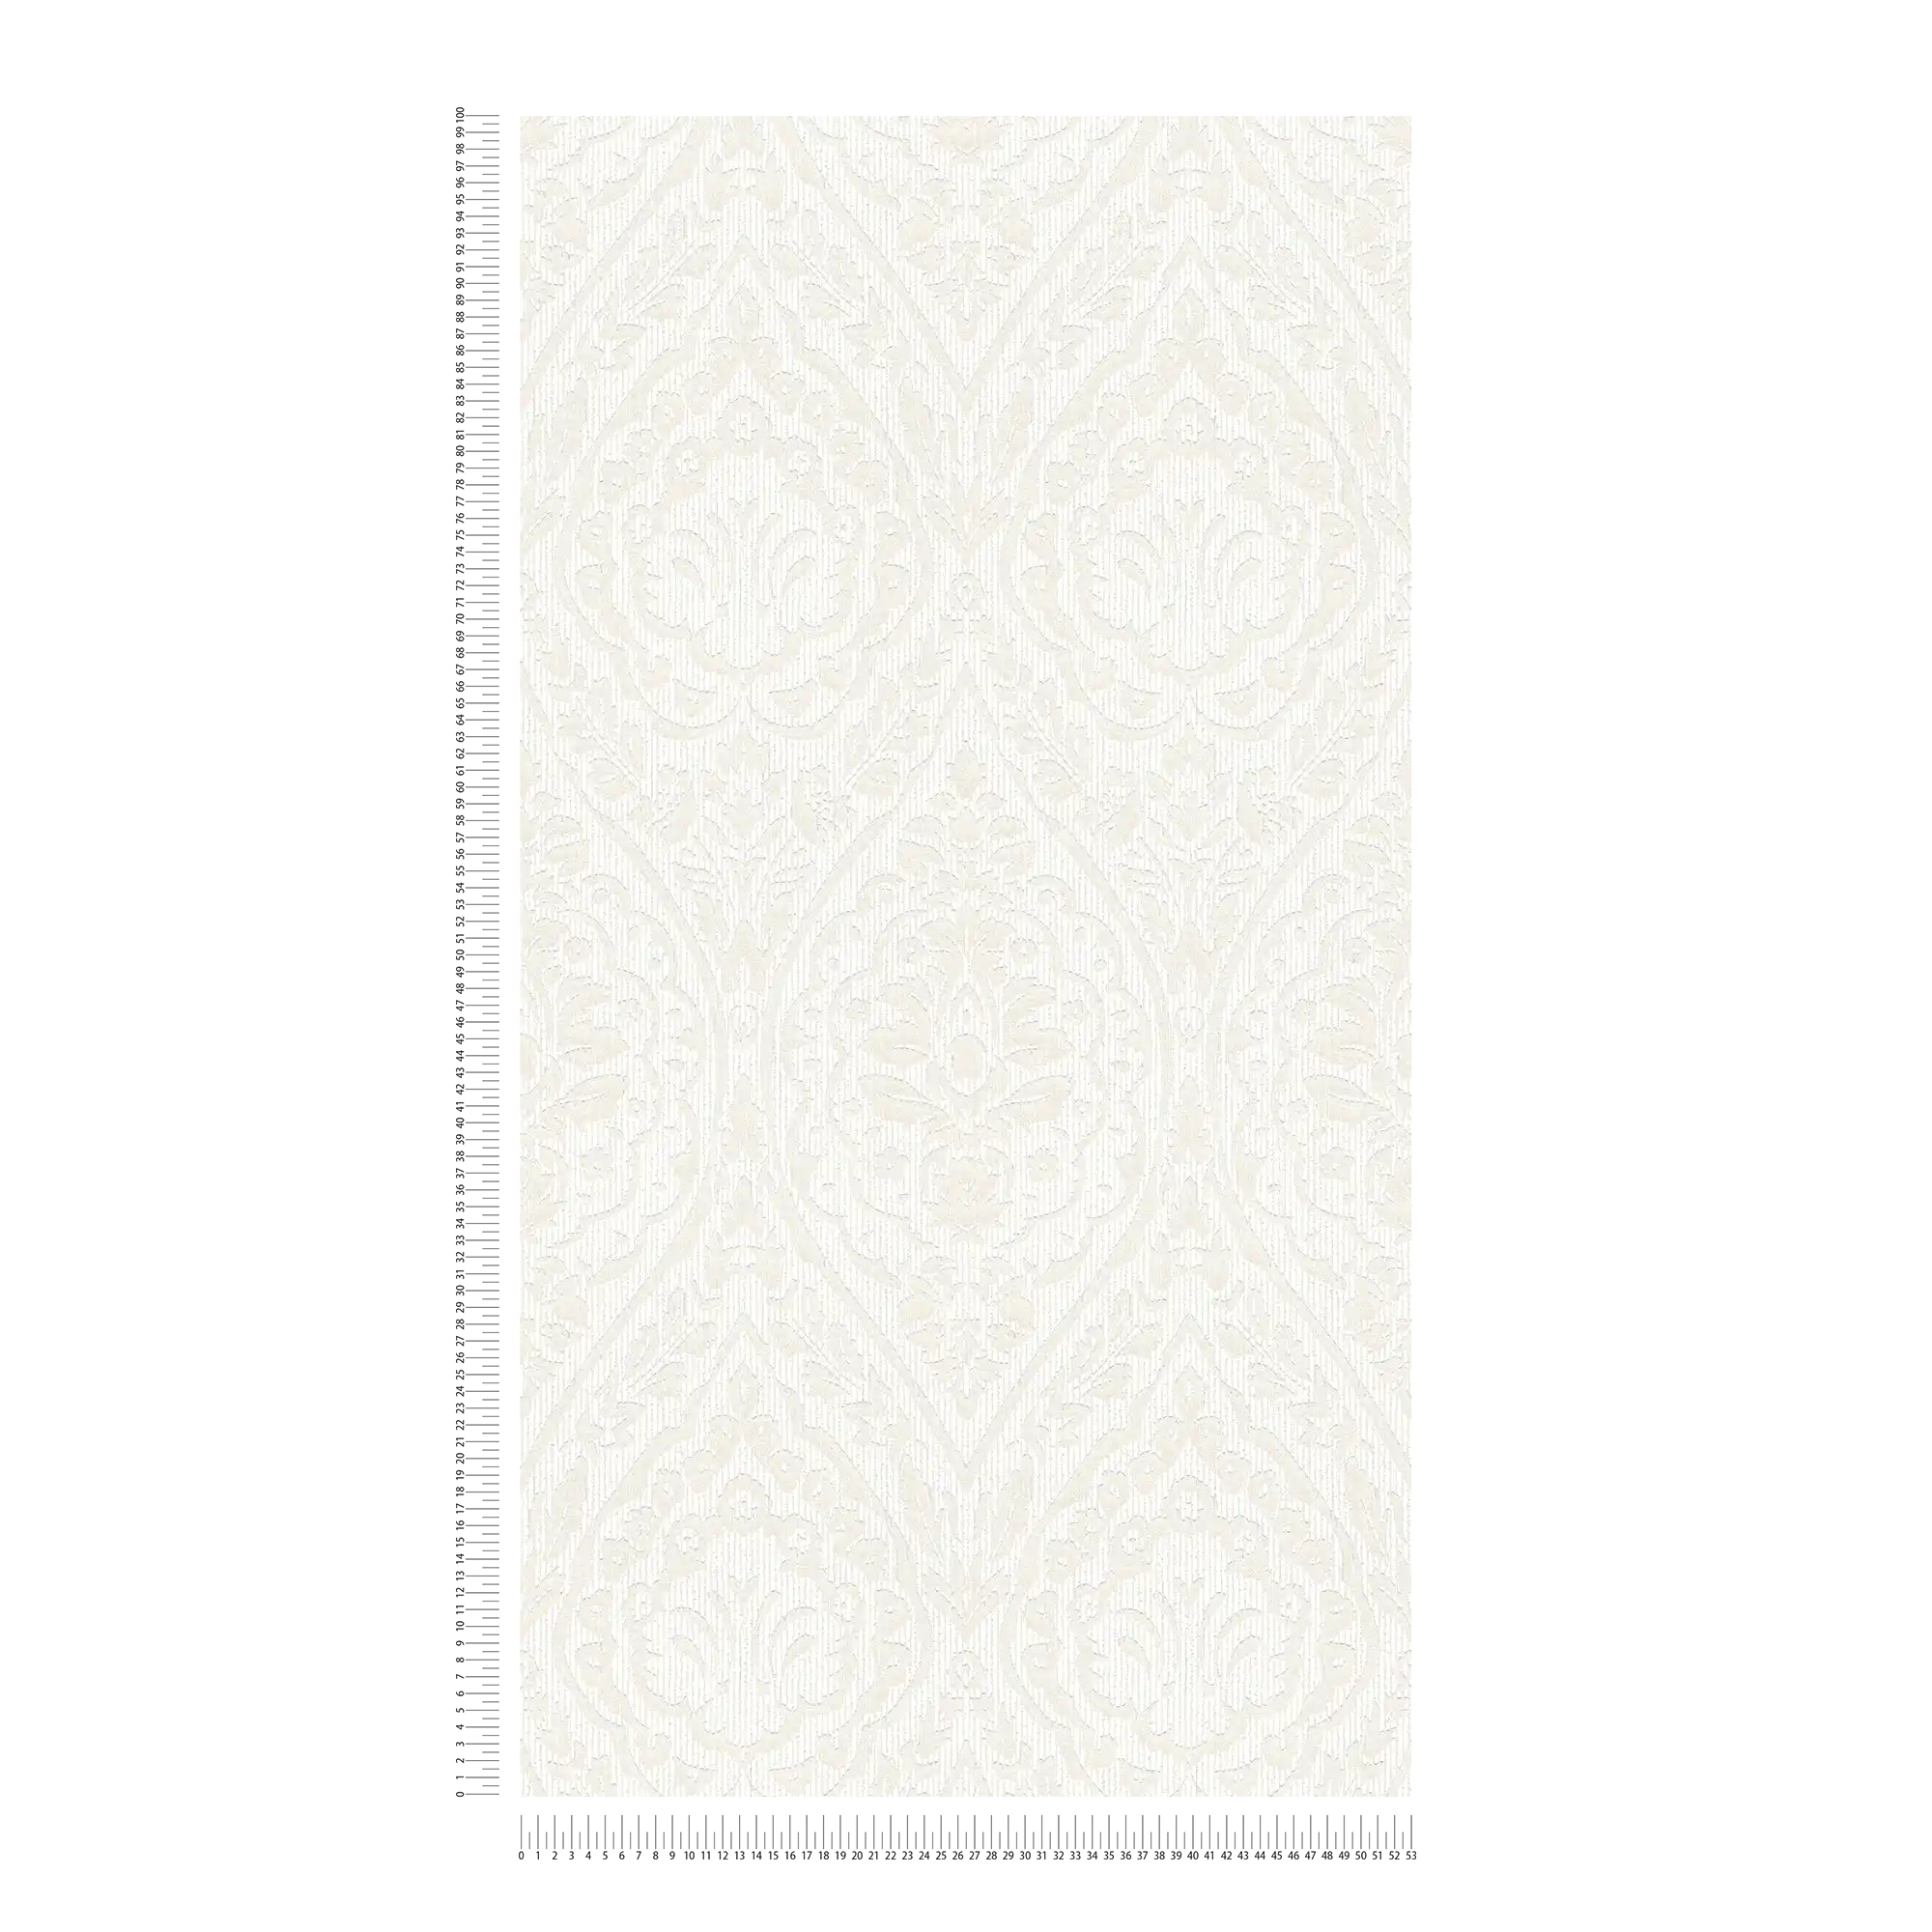             Strukturtapete mit floralem Ornamentmuster im Kolonial Stil – Weiß
        